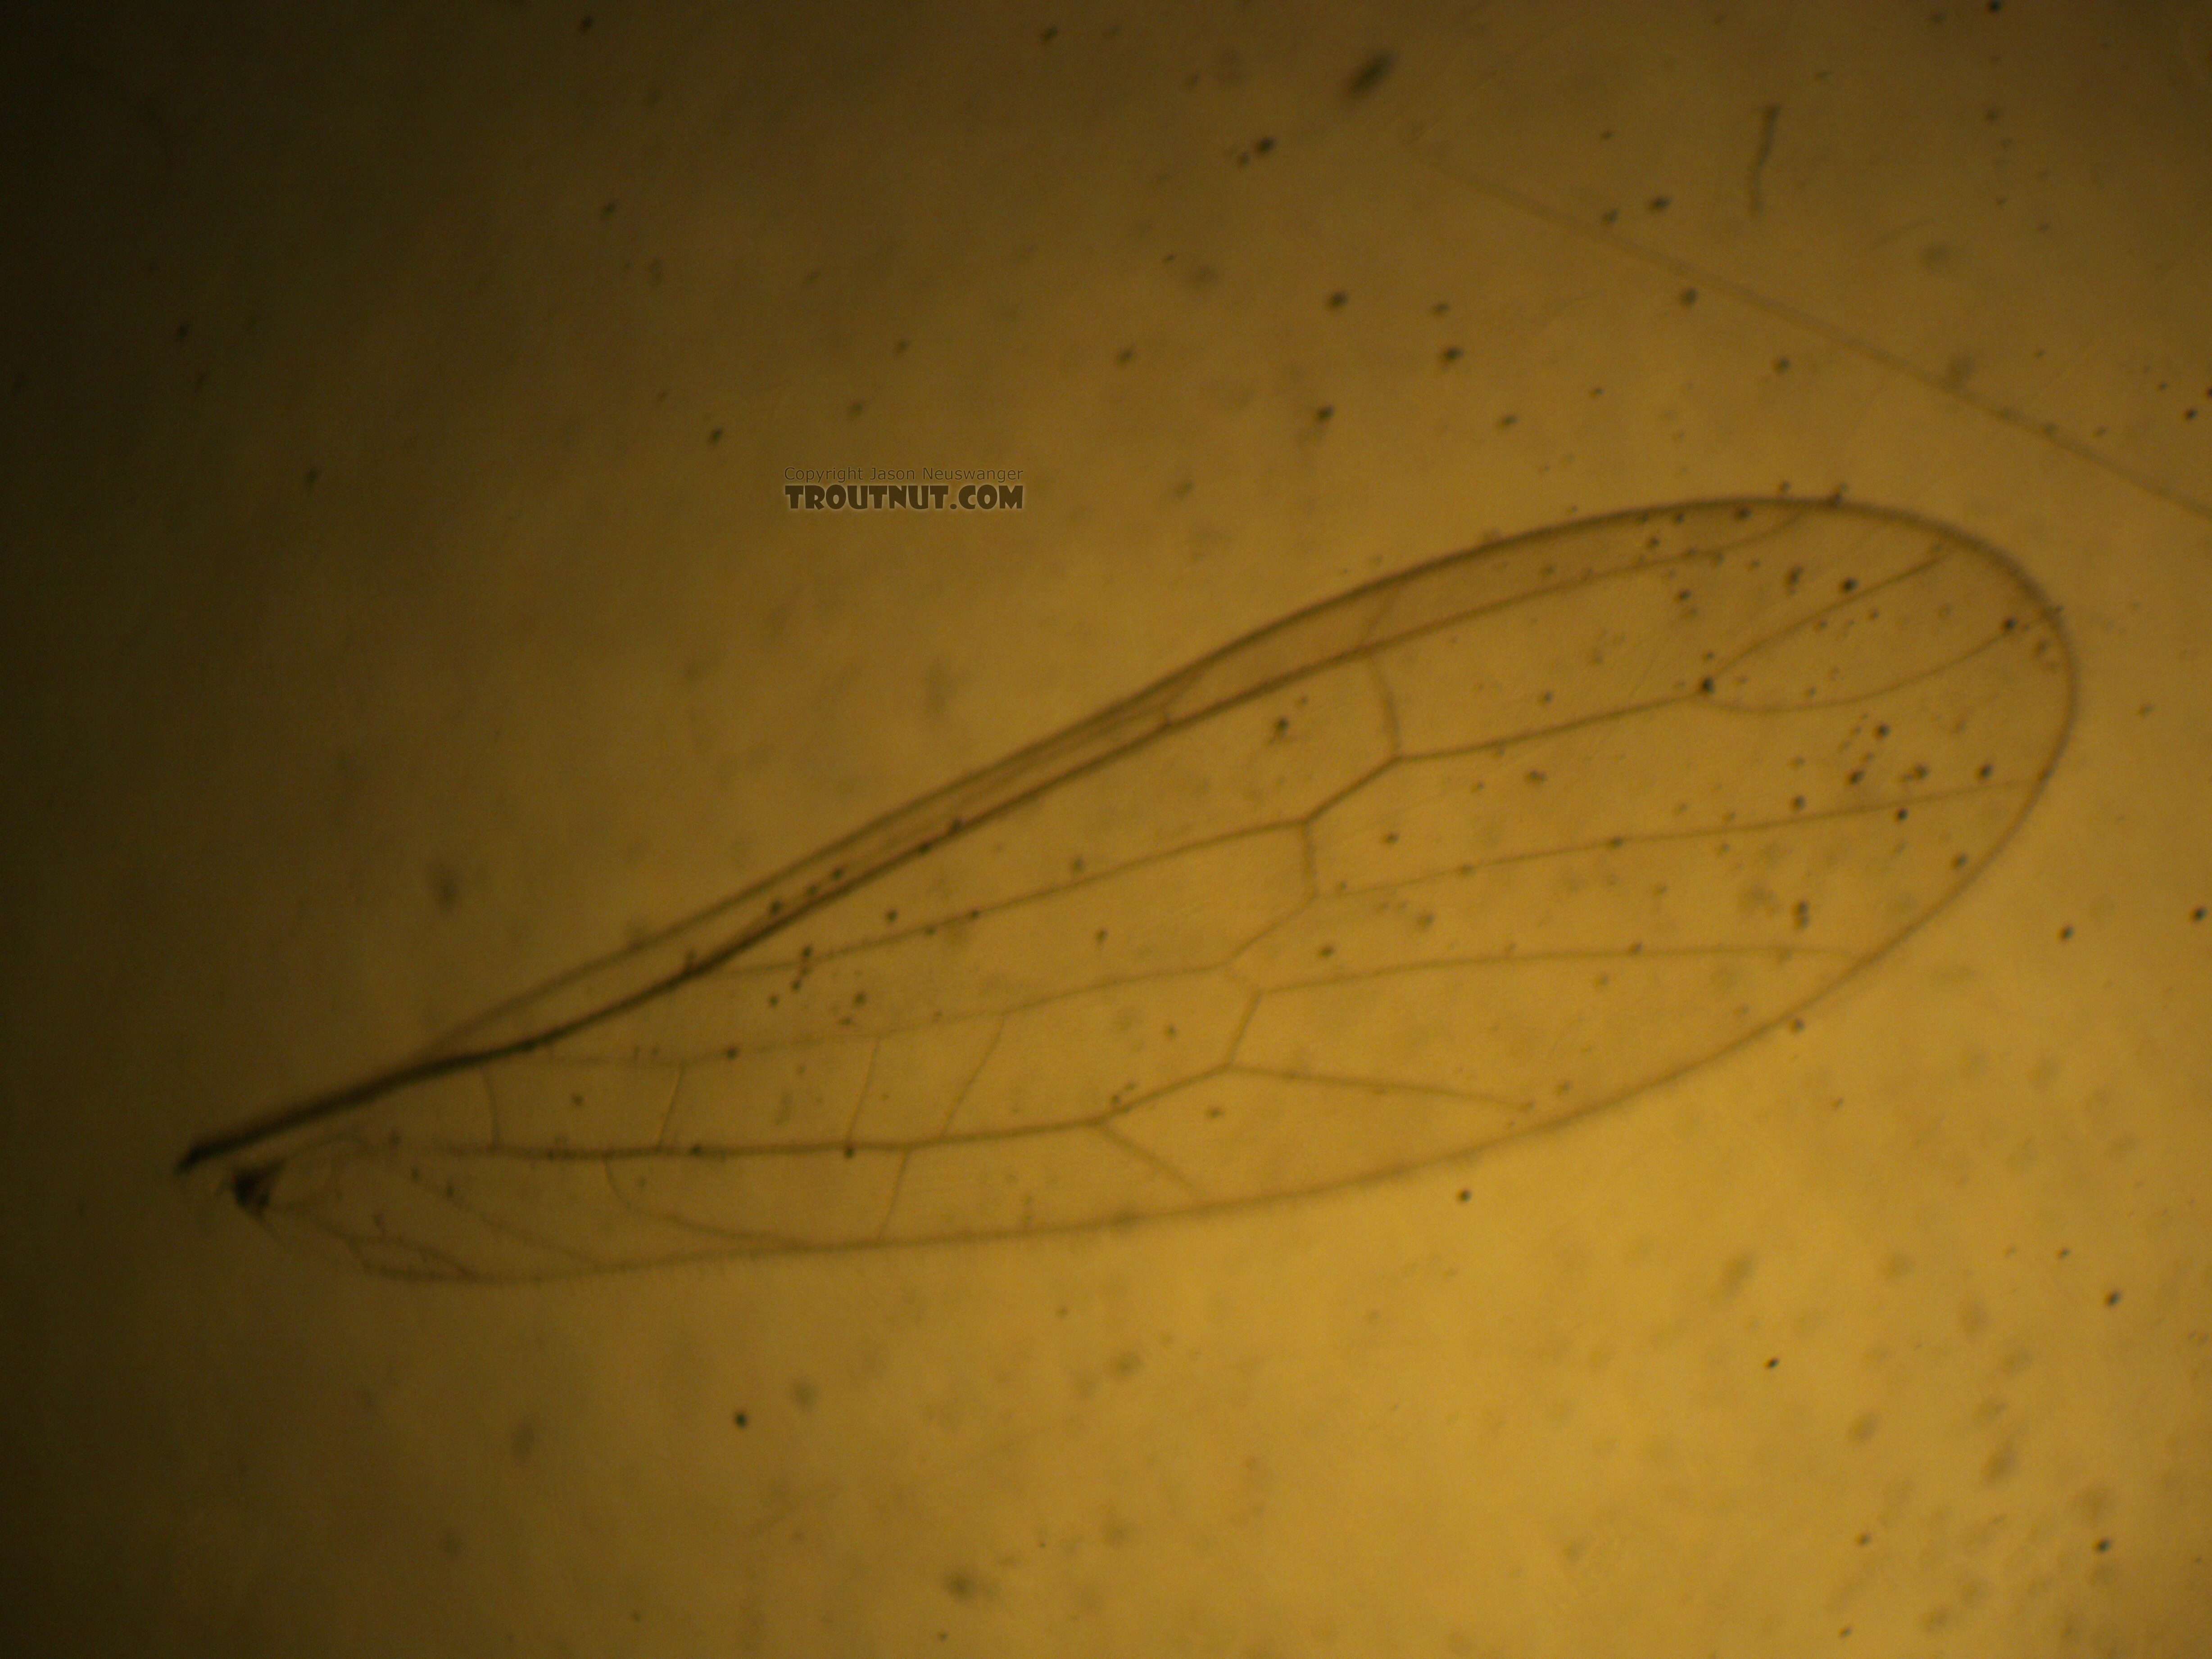 Fore wing.  Female Suwallia pallidula (Sallfly) Stonefly Adult from Mystery Creek #237 in Montana